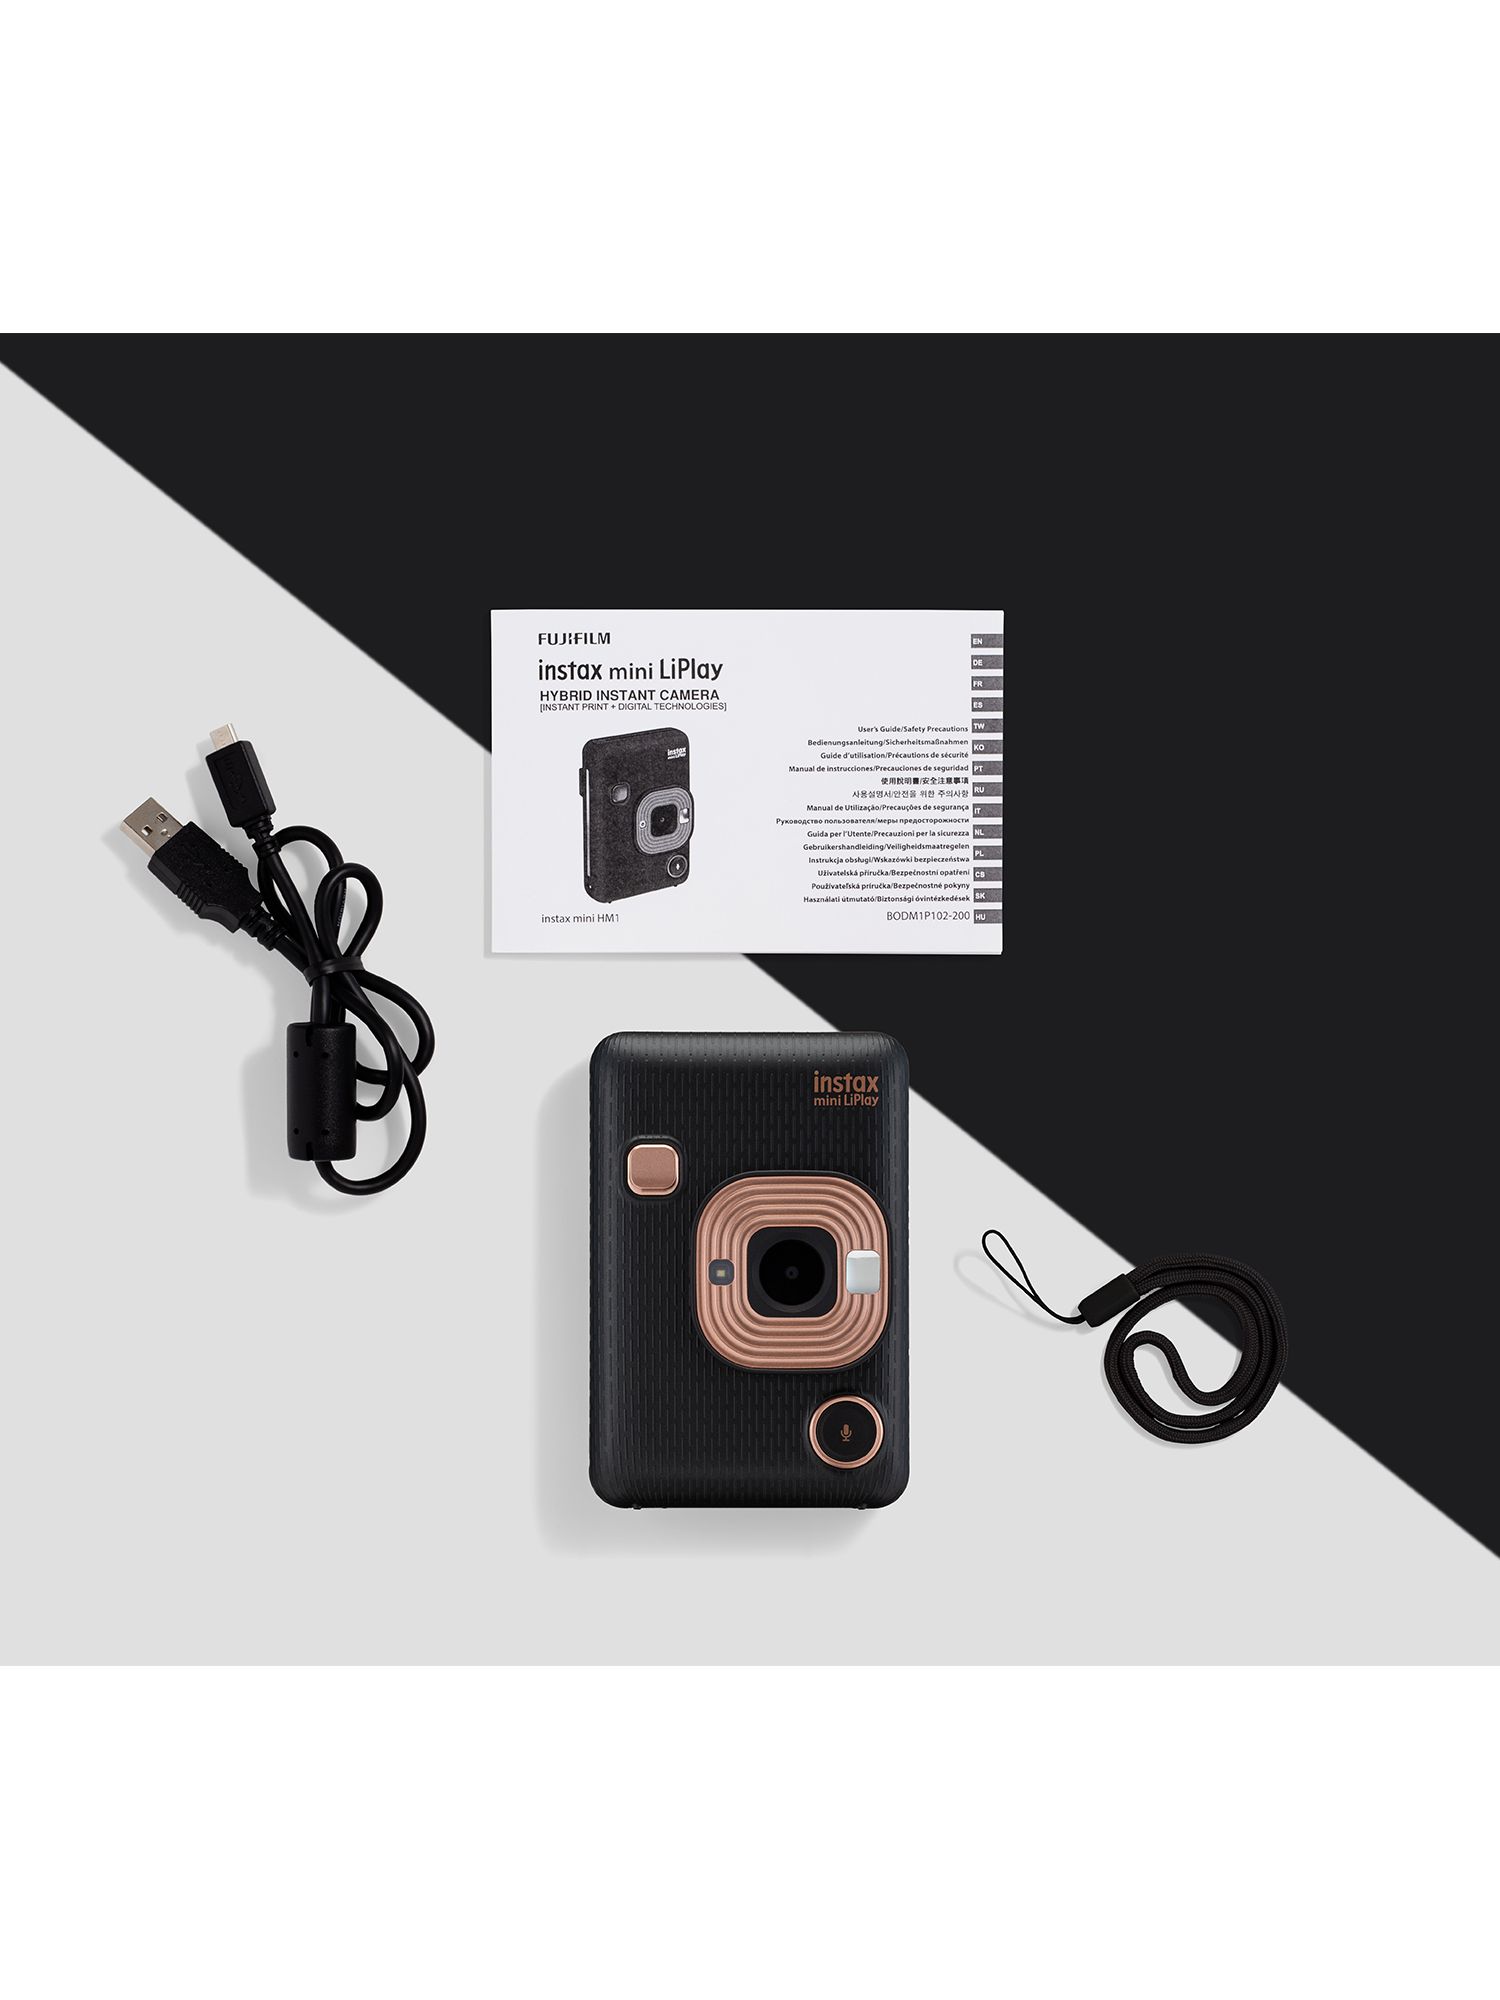 Fujifilm Instax Mini LiPlay from CameraWorld